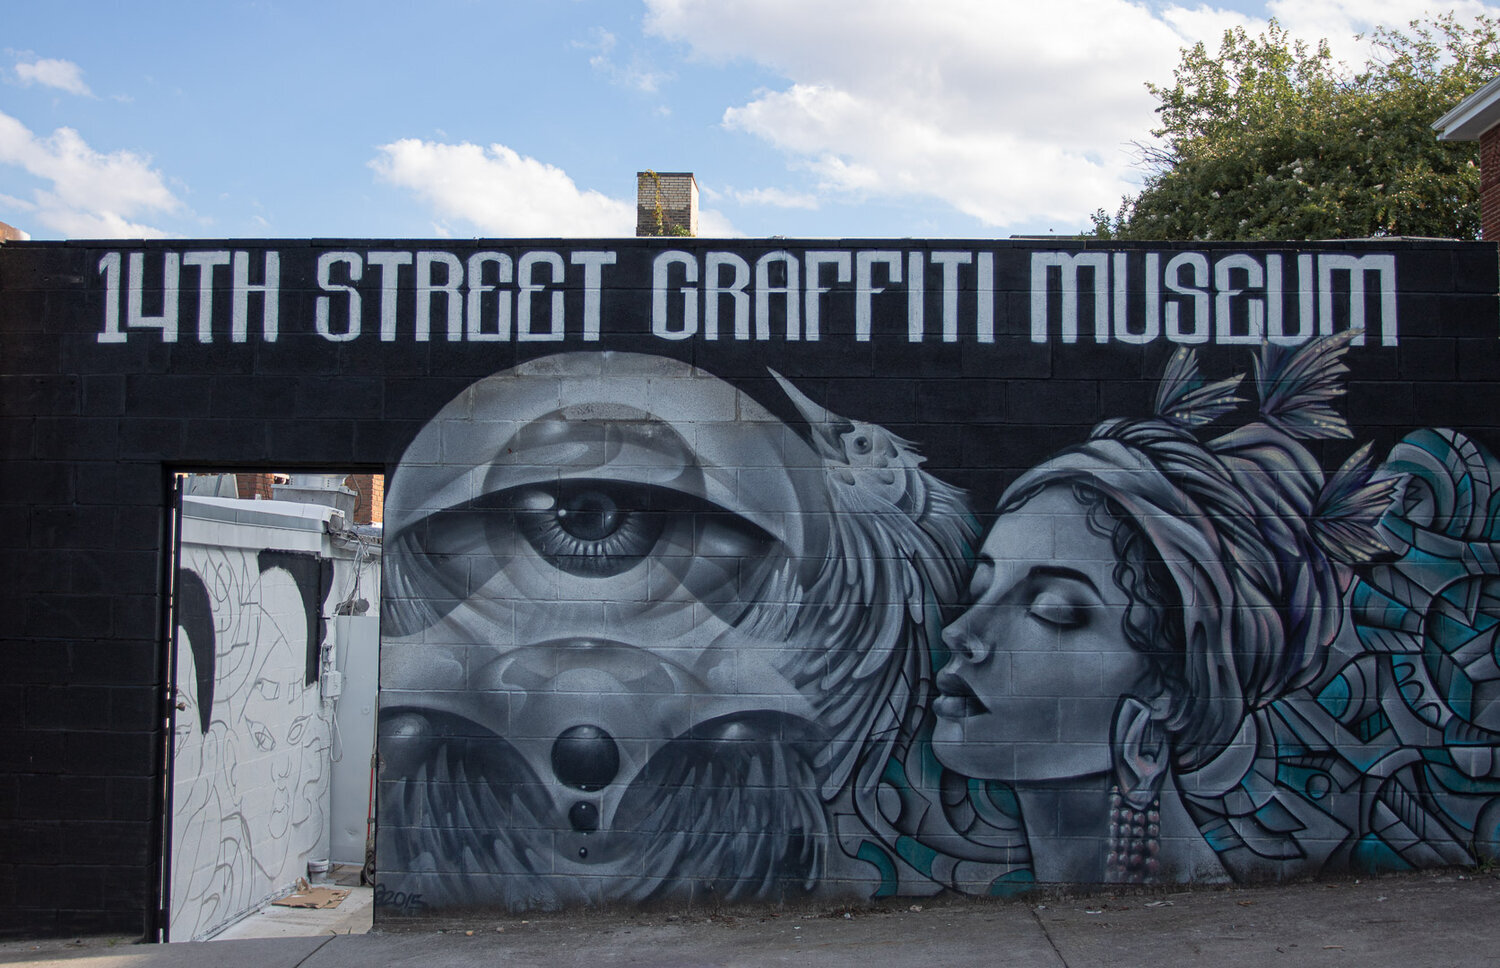 Petworth News: The 14th Street Graffiti Museum is where graffiti is treated as art